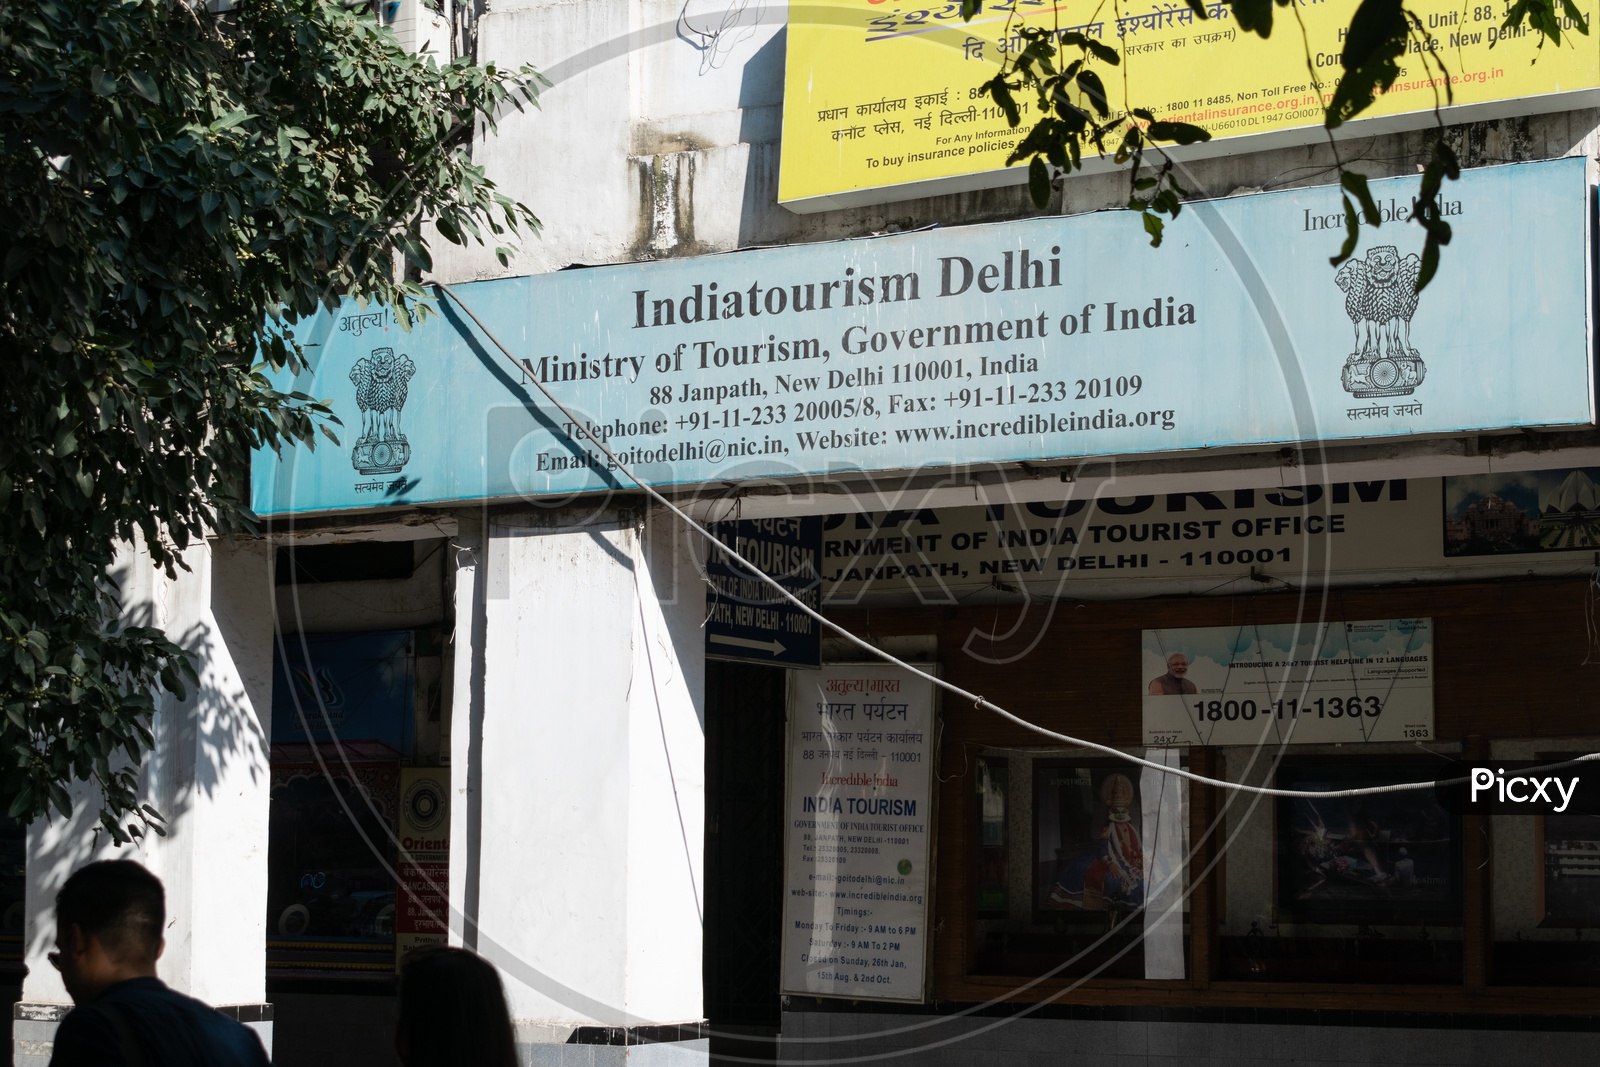 delhi tourism foreign exchange office